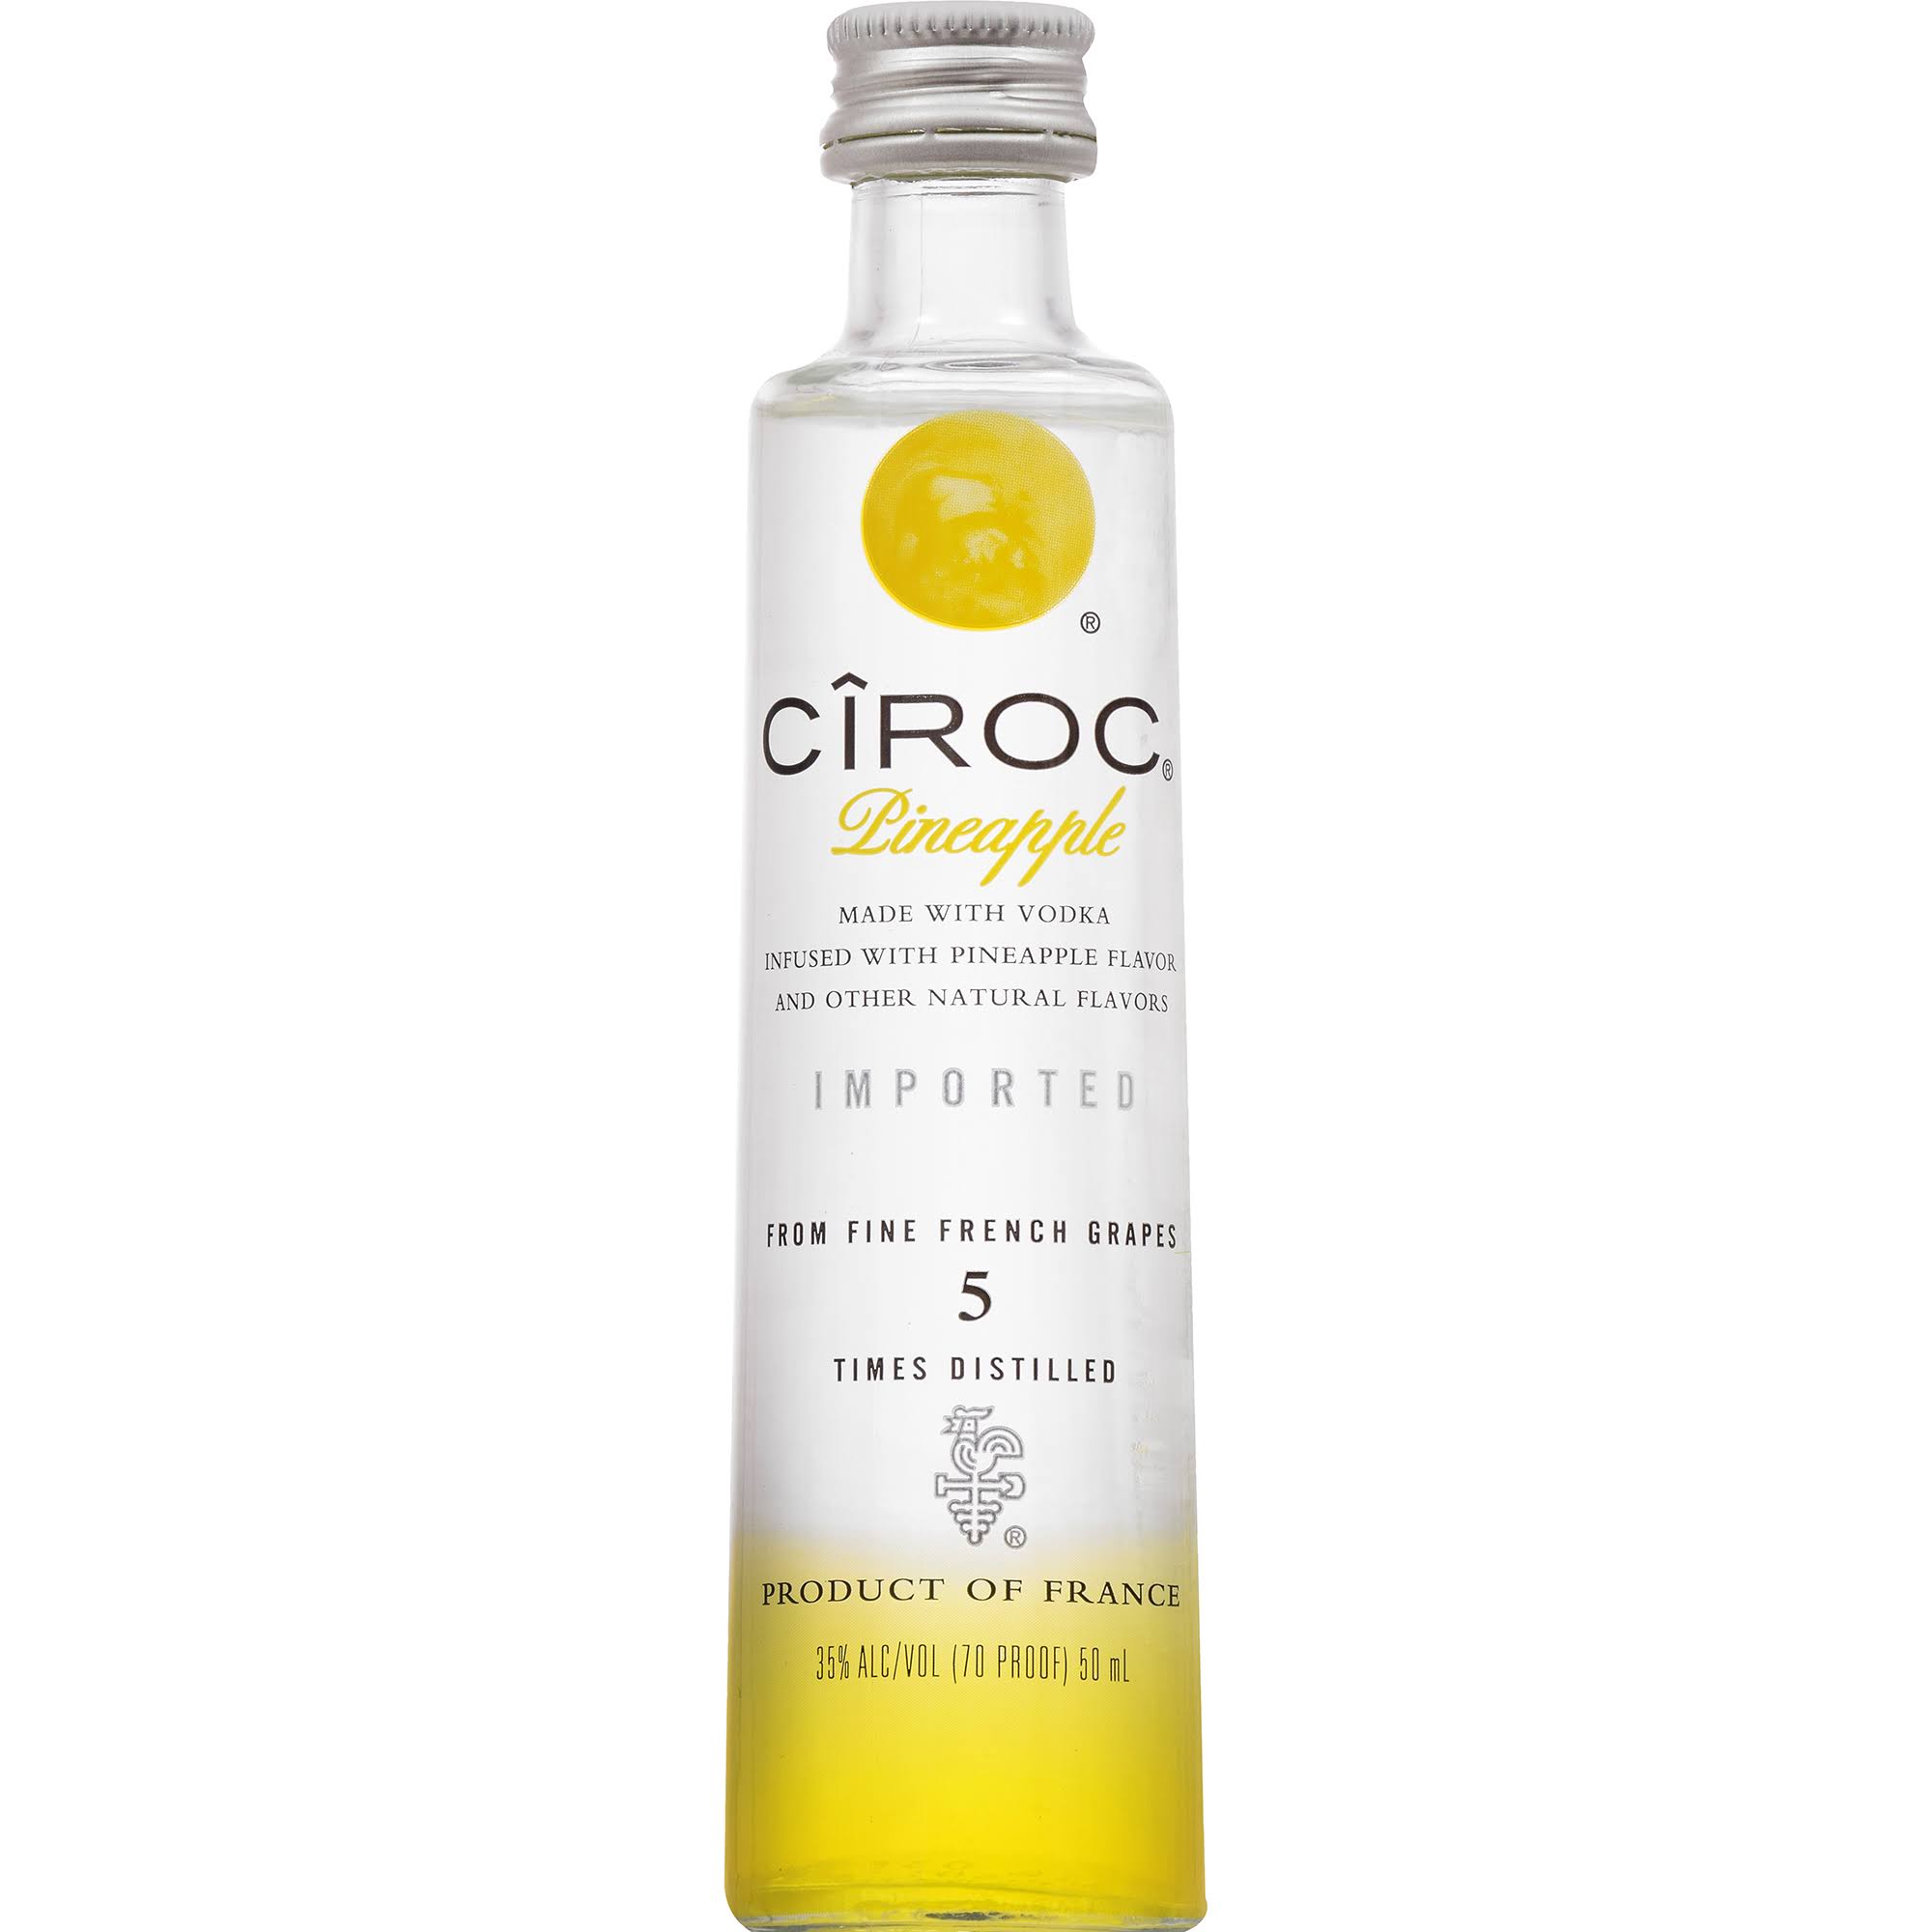 Ciroc Pineapple Vodka - 50 ml bottle